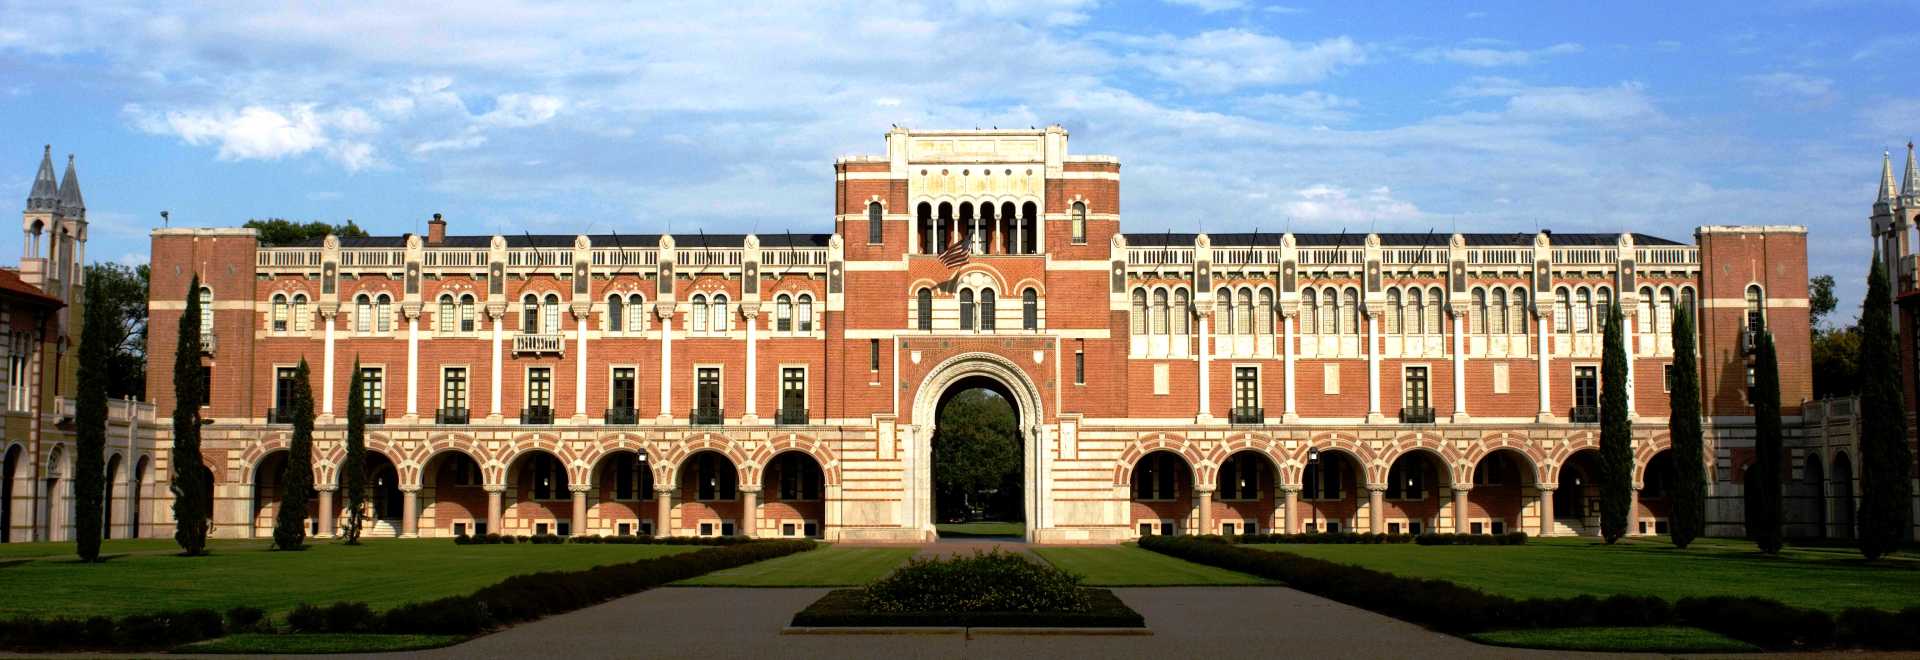 Houston Colleges & Universities | 14 Major Institutions